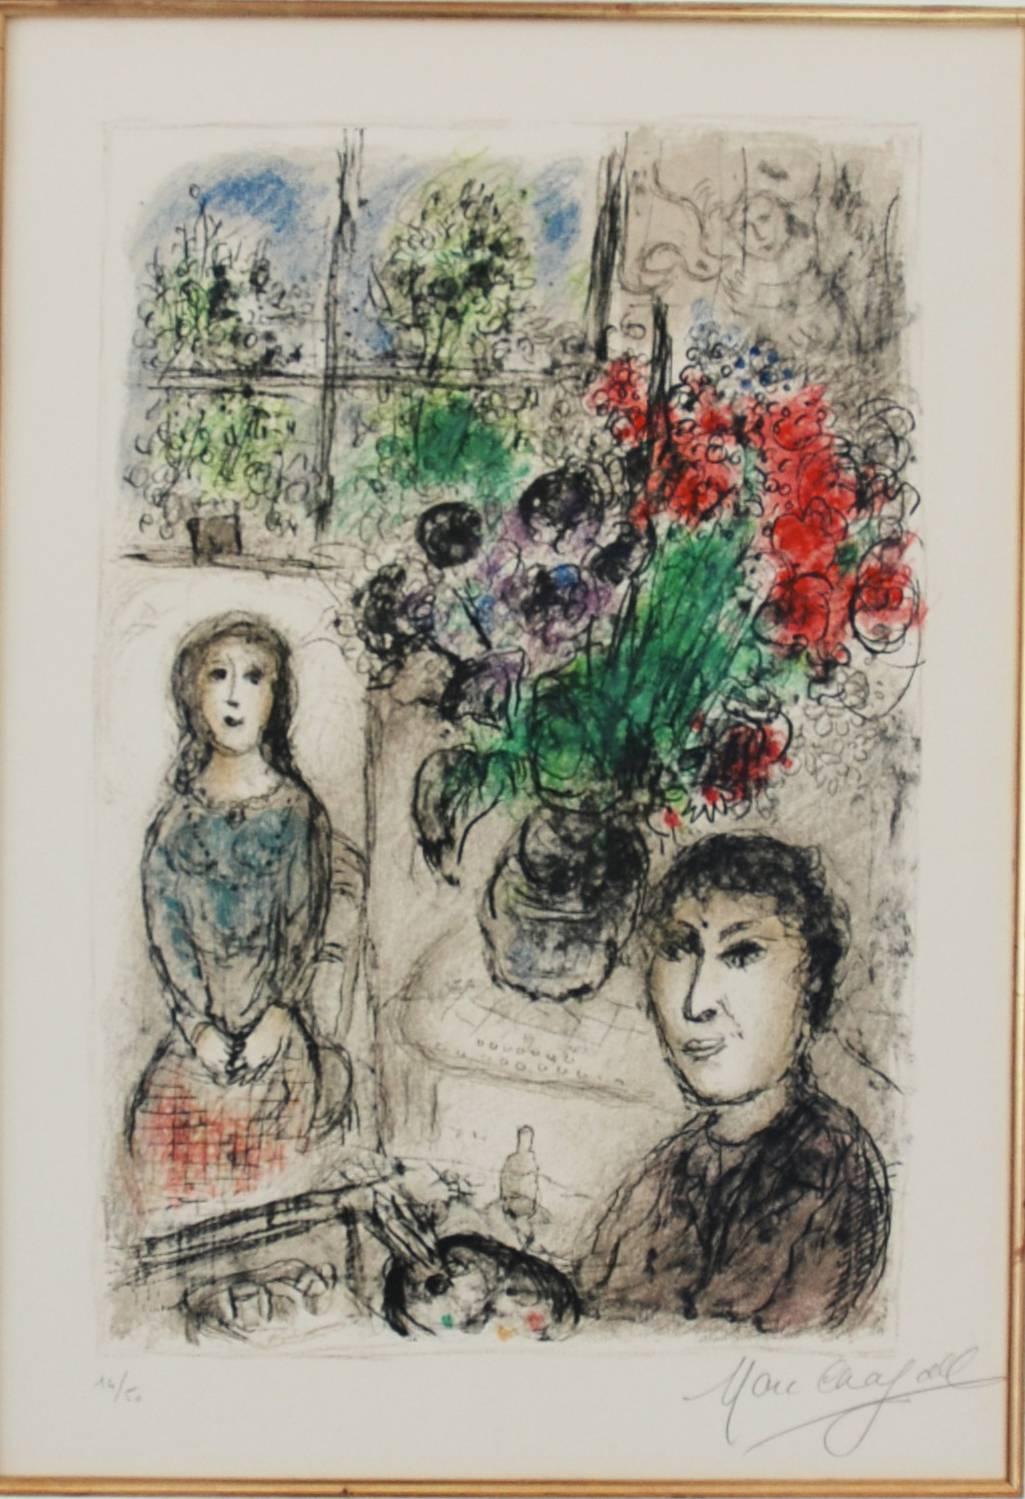  Le chevalet aux fleurs - Impressionist Print by Marc Chagall